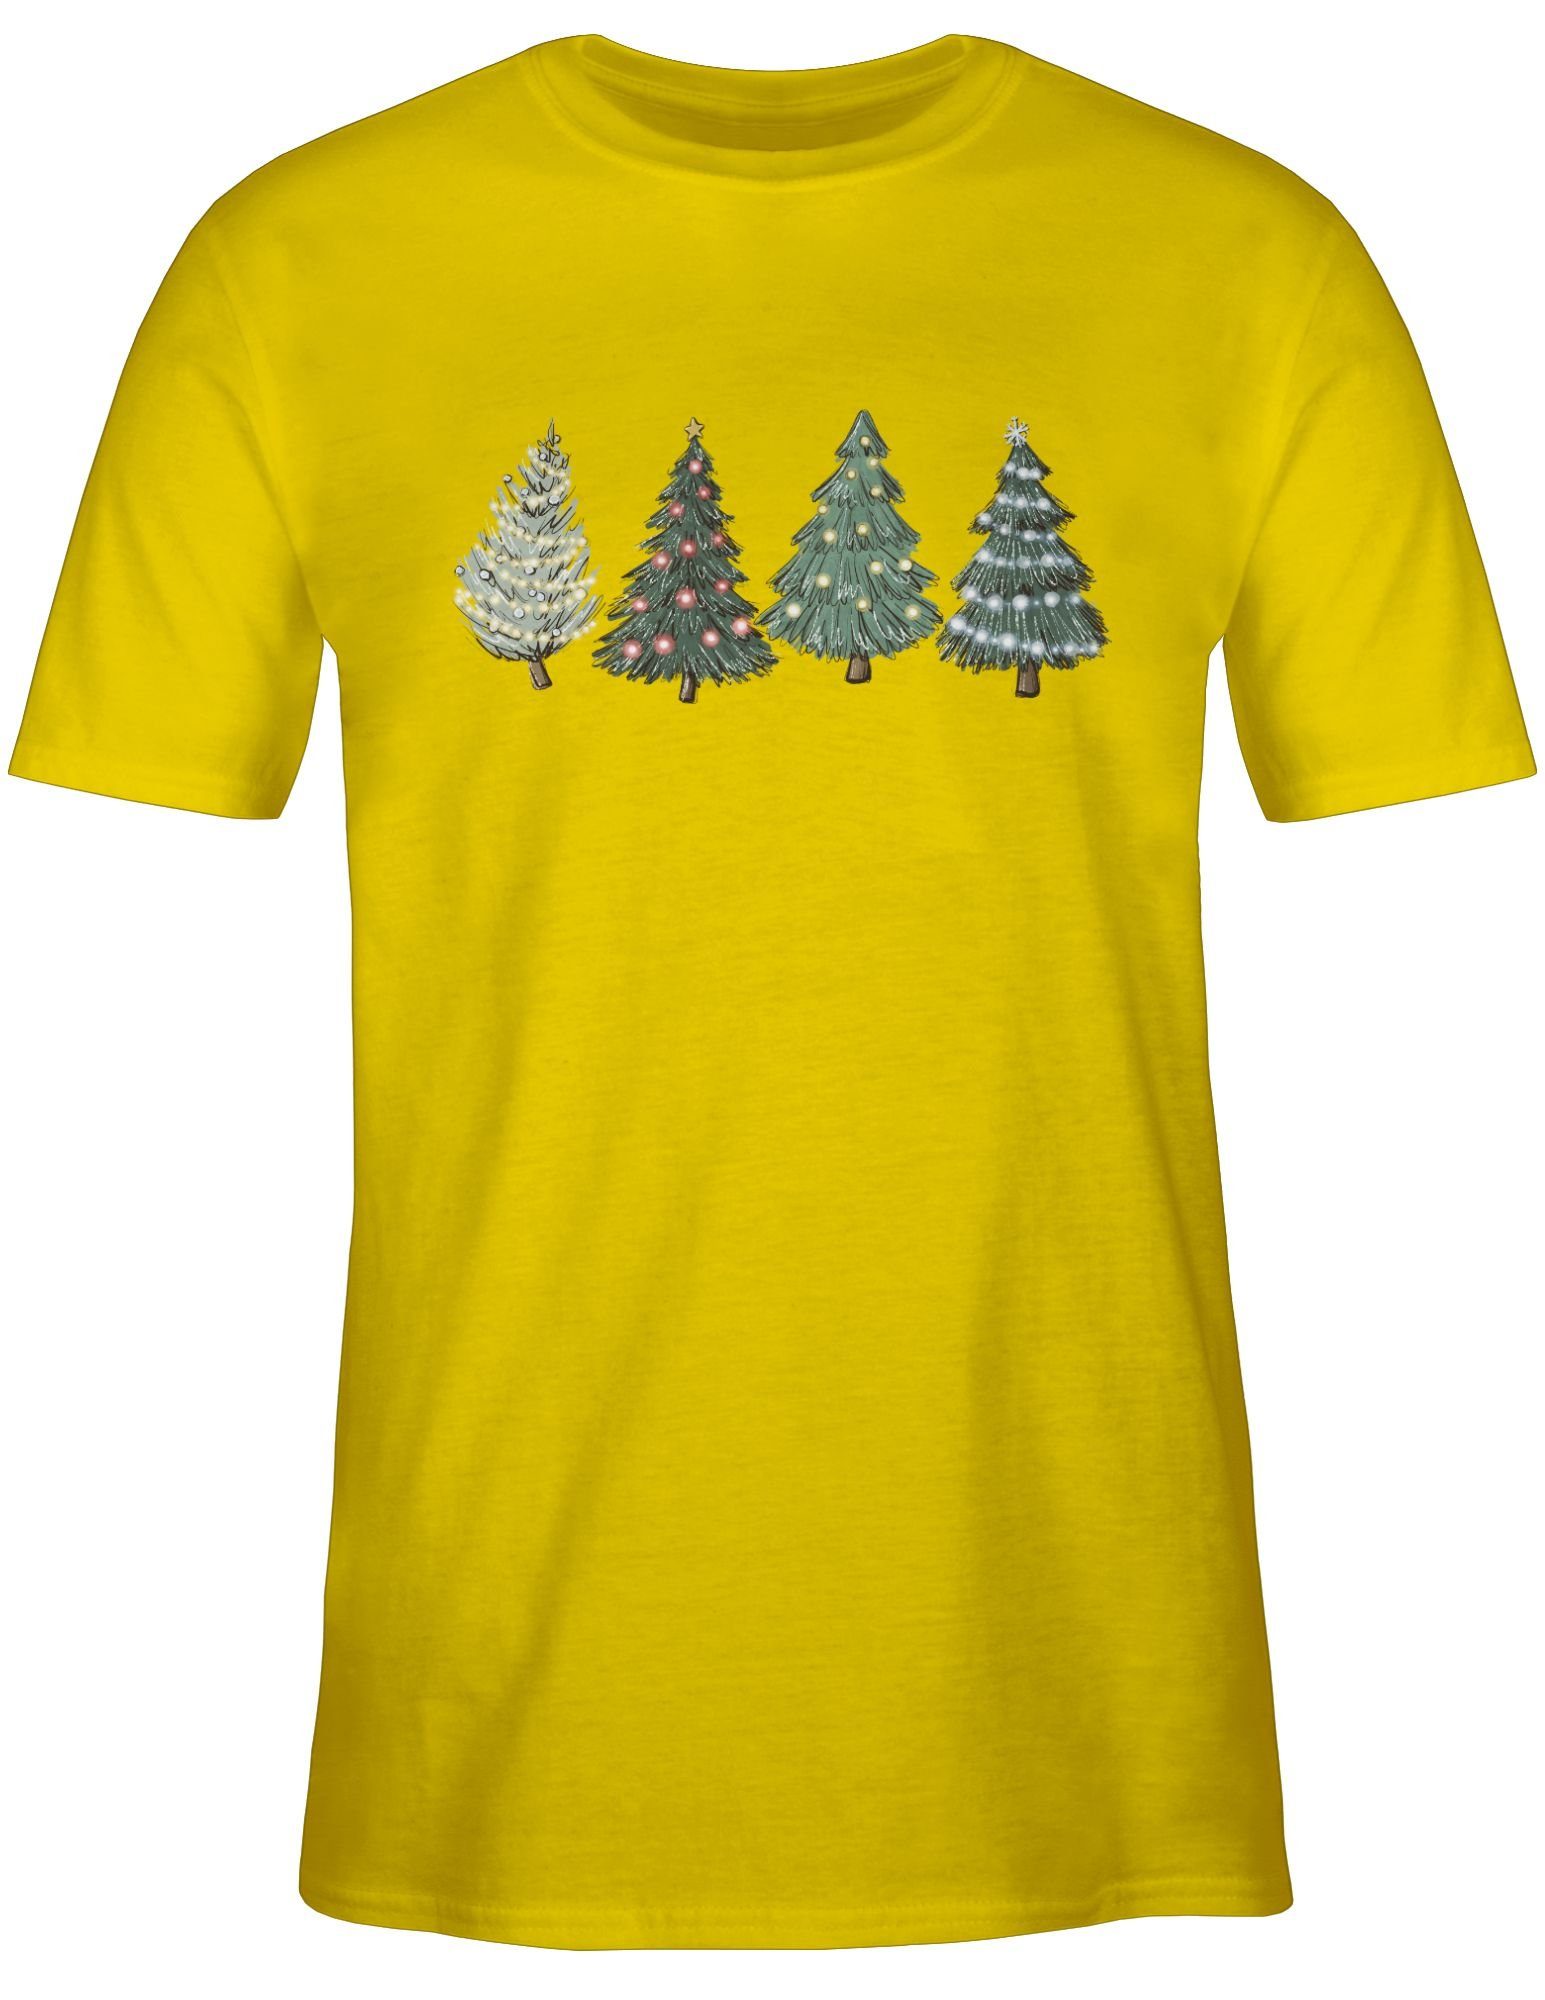 Weihachten Kleidung T-Shirt Shirtracer Gelb Weihnachtsbäume 02